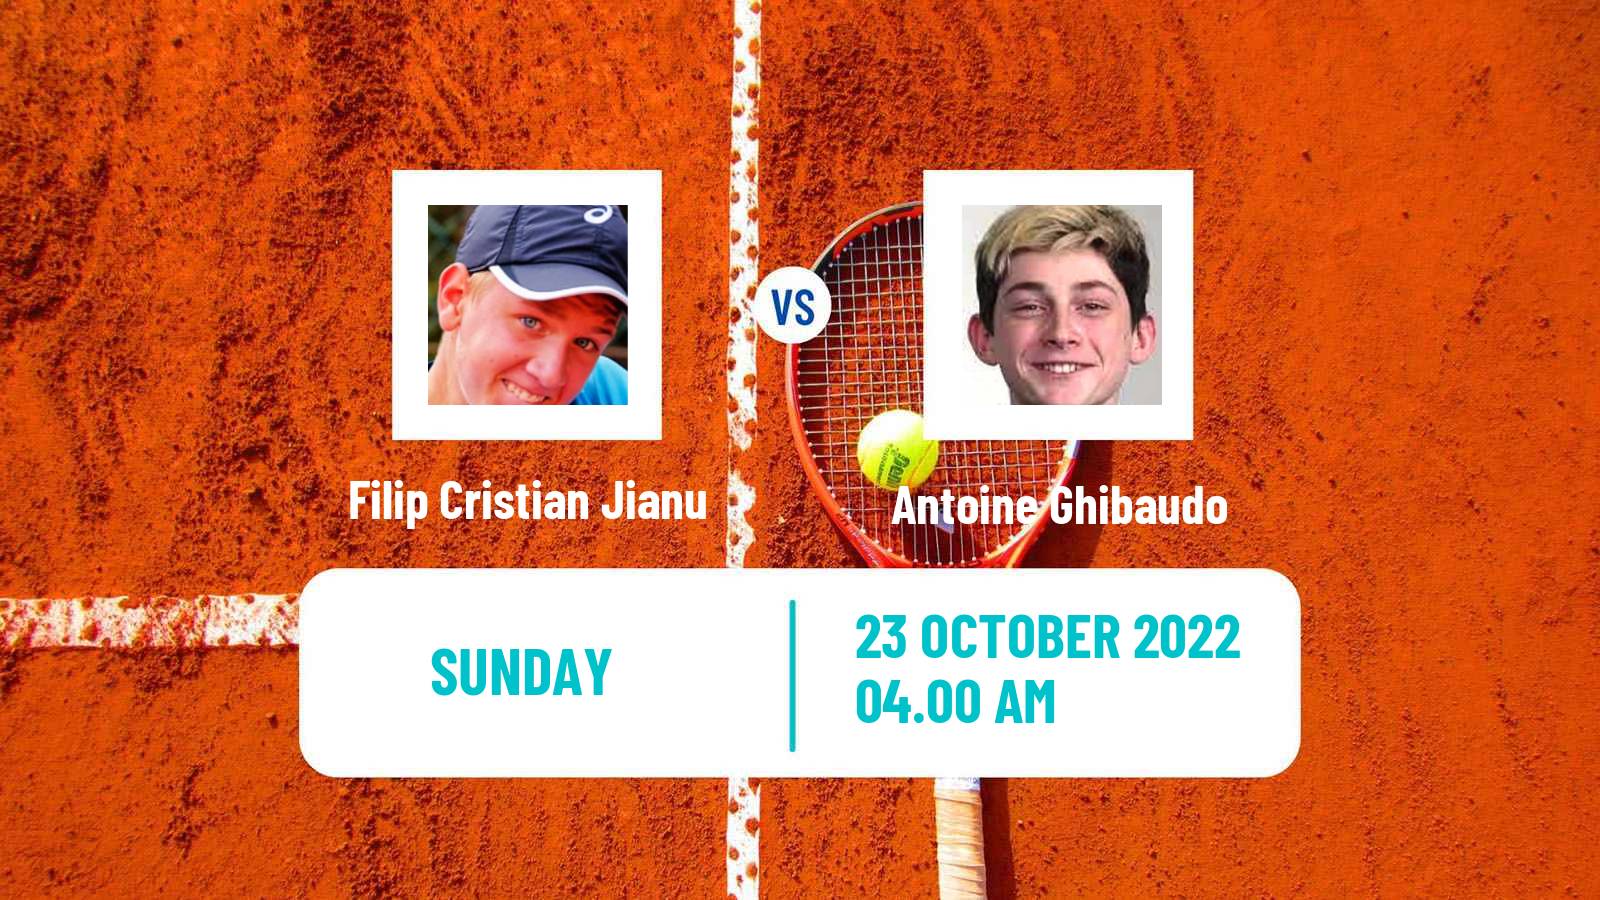 Tennis ATP Challenger Filip Cristian Jianu - Antoine Ghibaudo